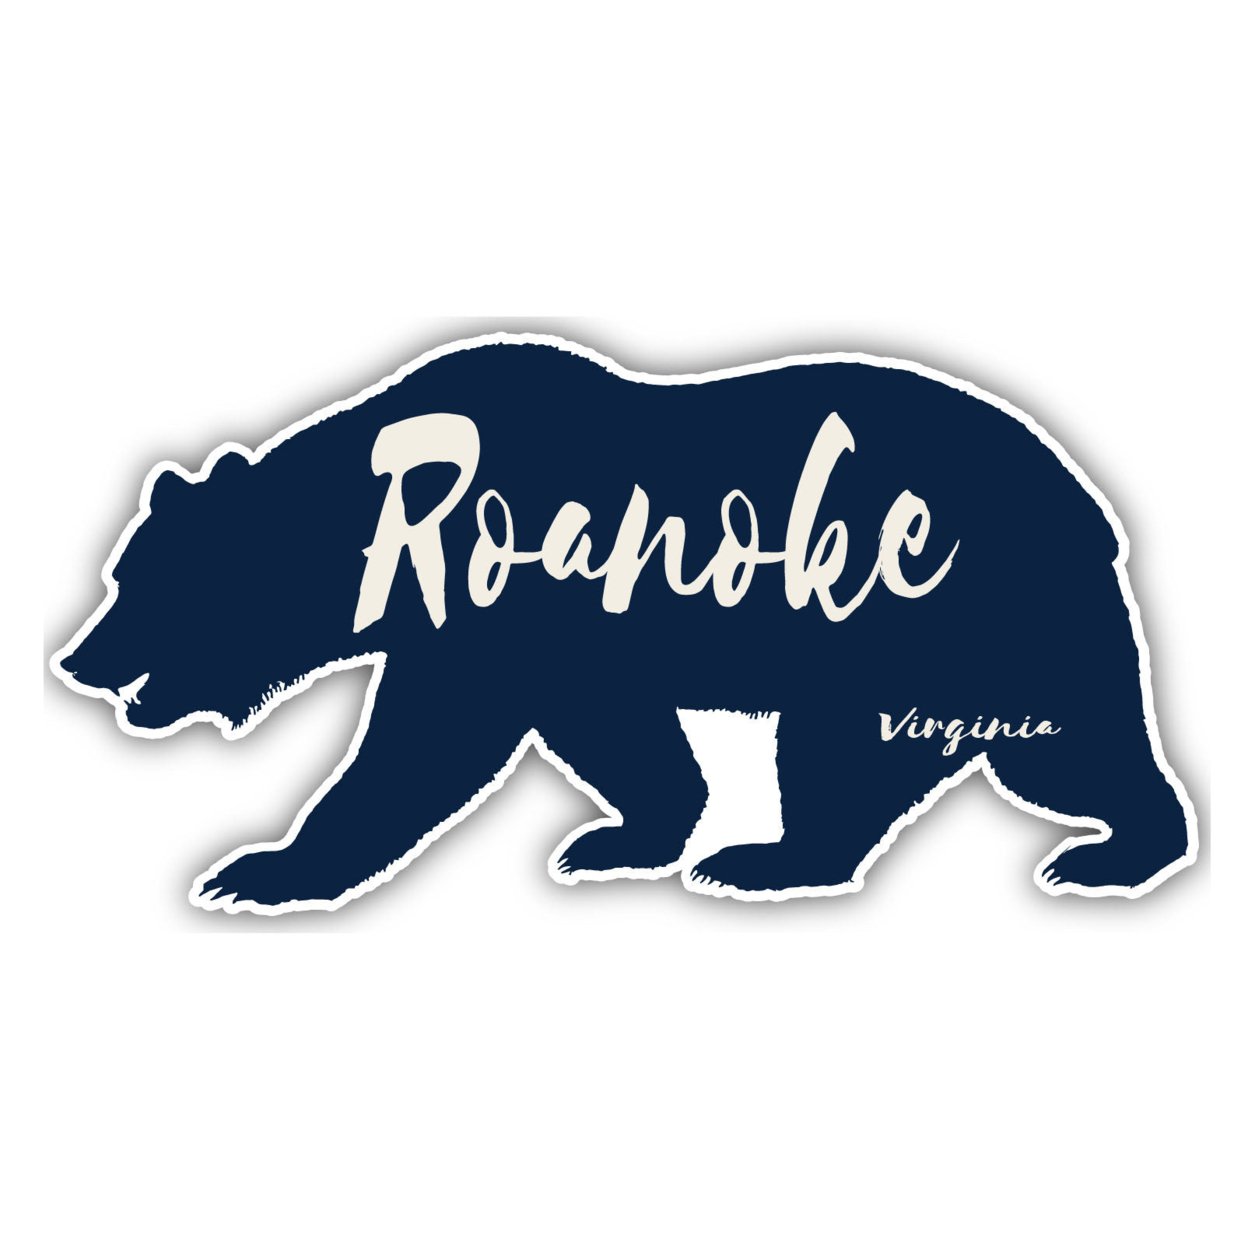 Roanoke Virginia Souvenir Decorative Stickers (Choose Theme And Size) - Single Unit, 2-Inch, Bear